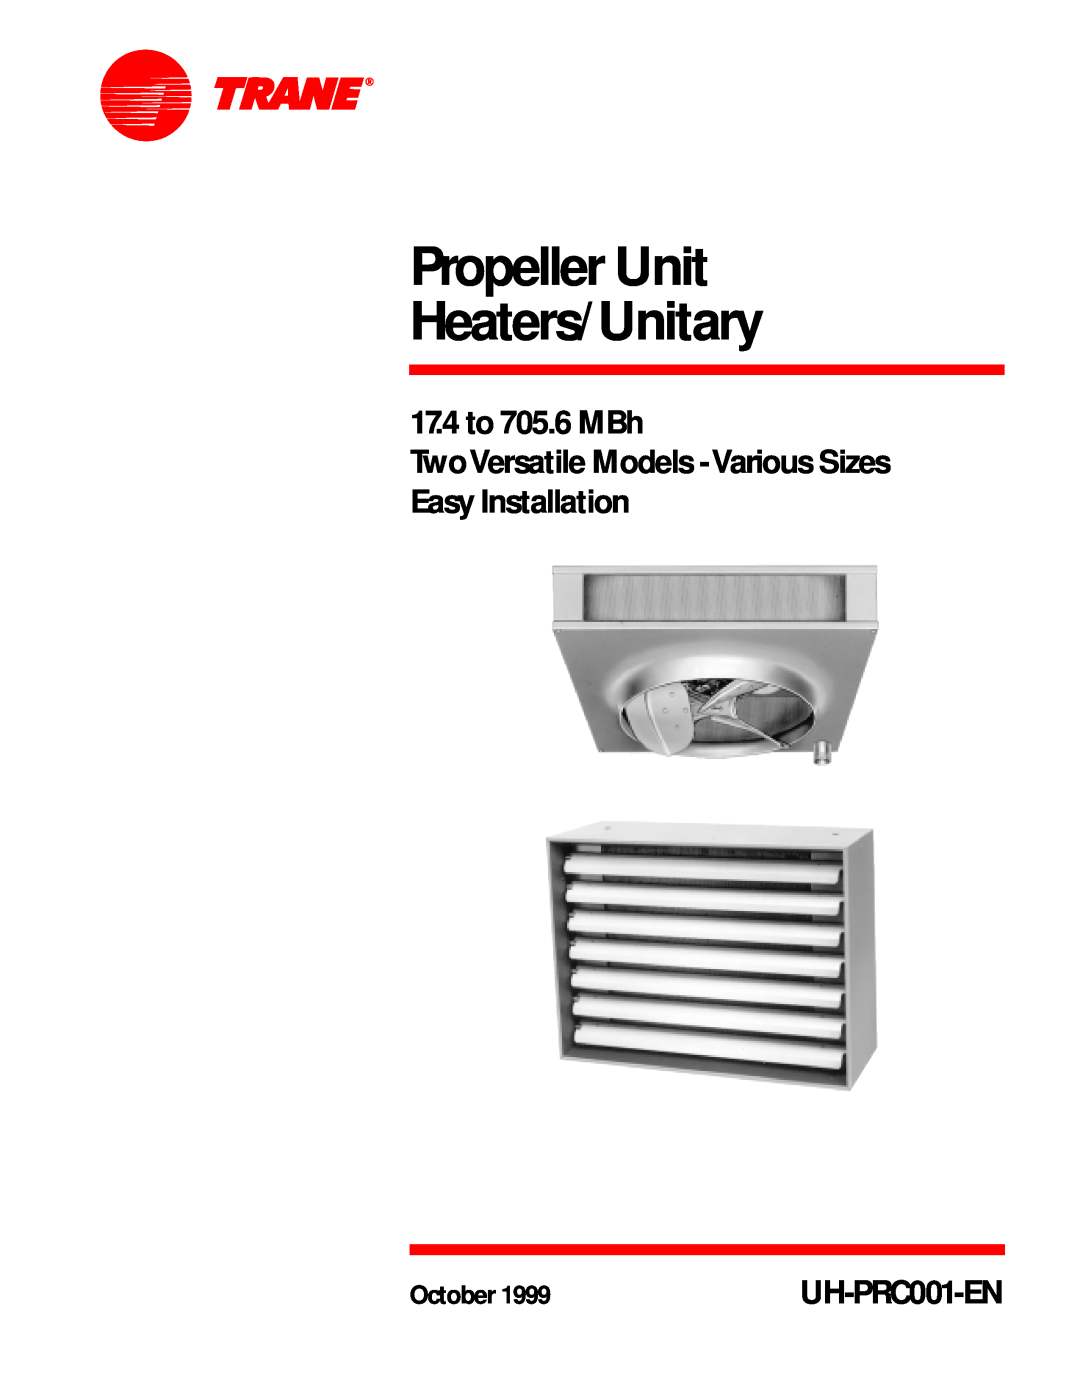 Trane UH-PRC001-EN manual Propeller Unit Heaters/Unitary, 17.4 to 705.6 MBh, October 